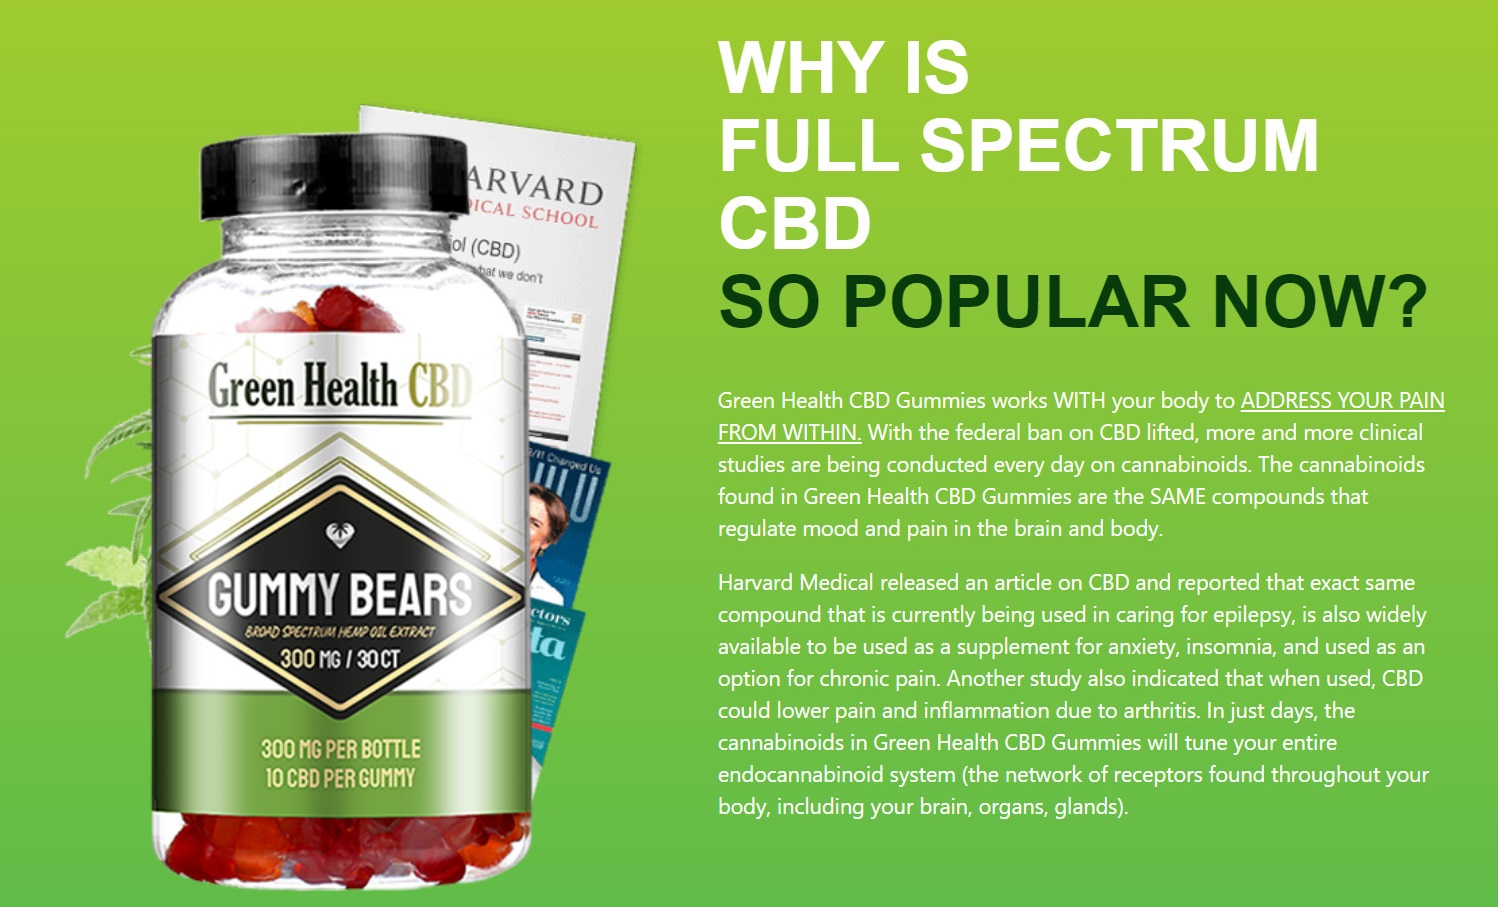 Green Health CBD Gummy Bears Introduction